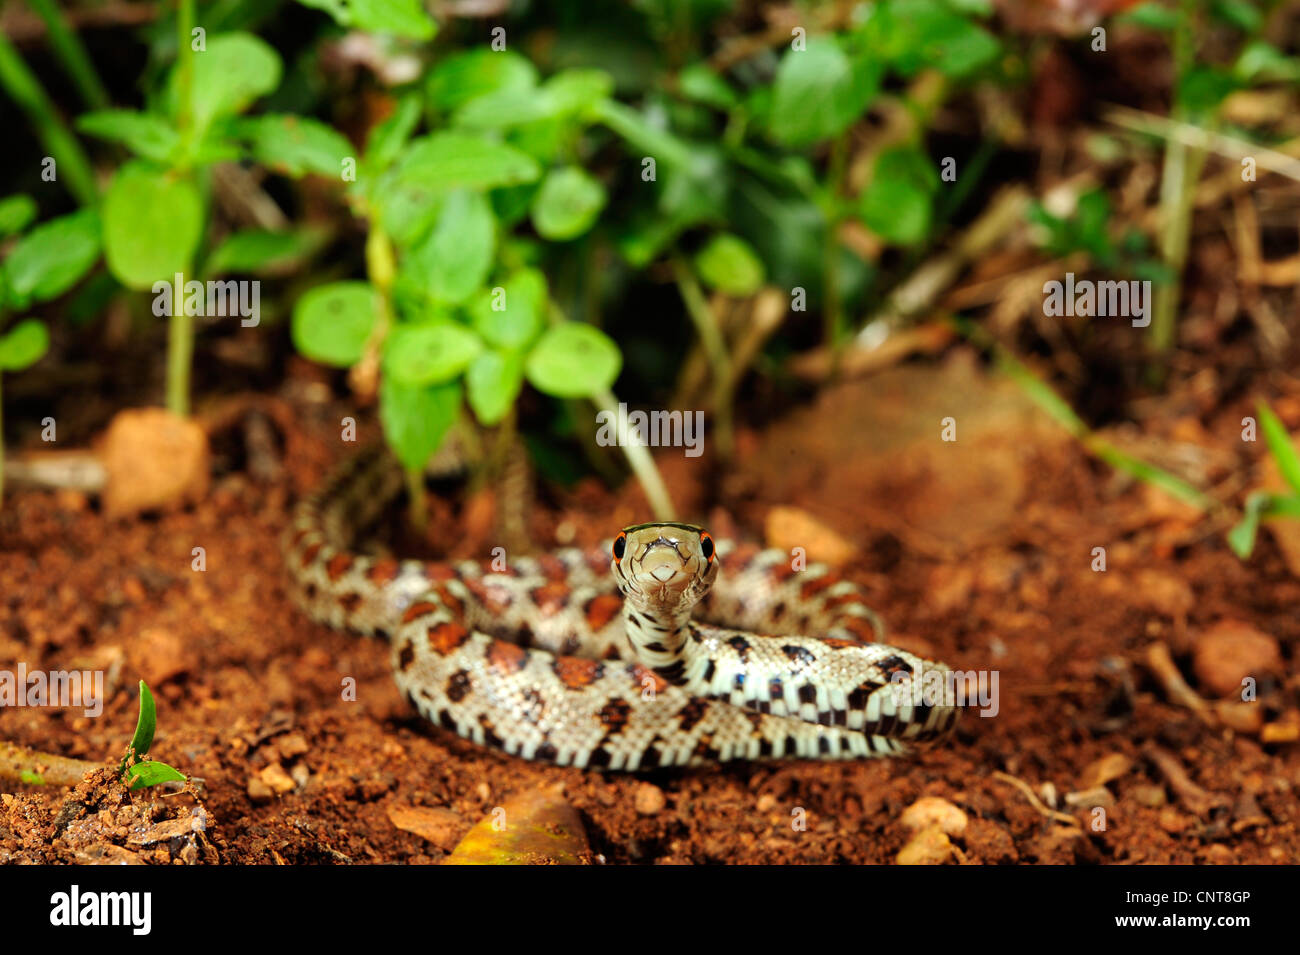 leopard snake (Zamenis situla, Elaphe situla), looking into the camera, Greece, Peloponnes, Natura 2000 Area Gialova Lagune Stock Photo